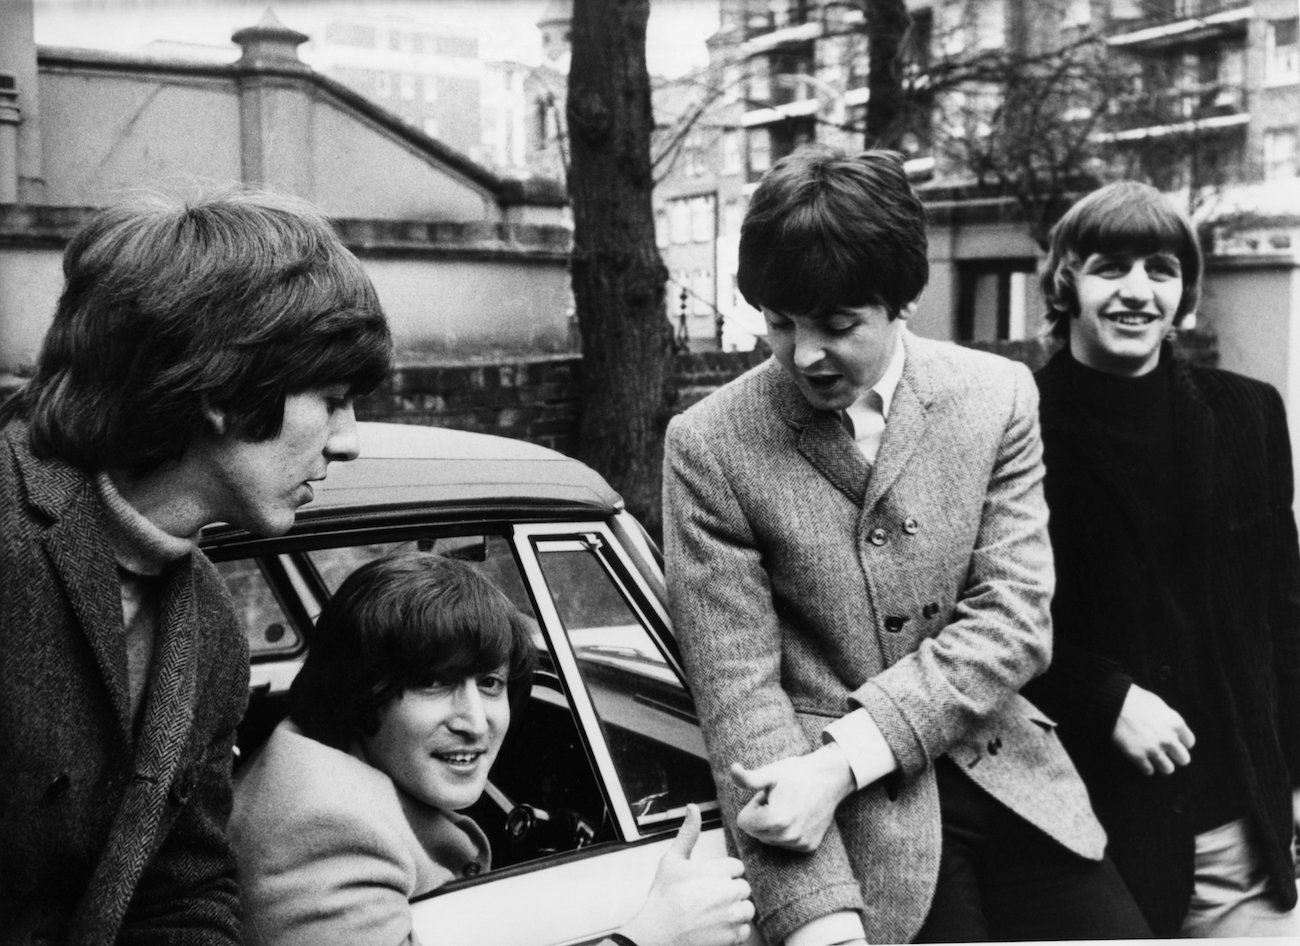 George Harrison, John Lennon, Paul McCartney, and Ringo Starr of The Beatles following John's successful drivers license exam in 1965.